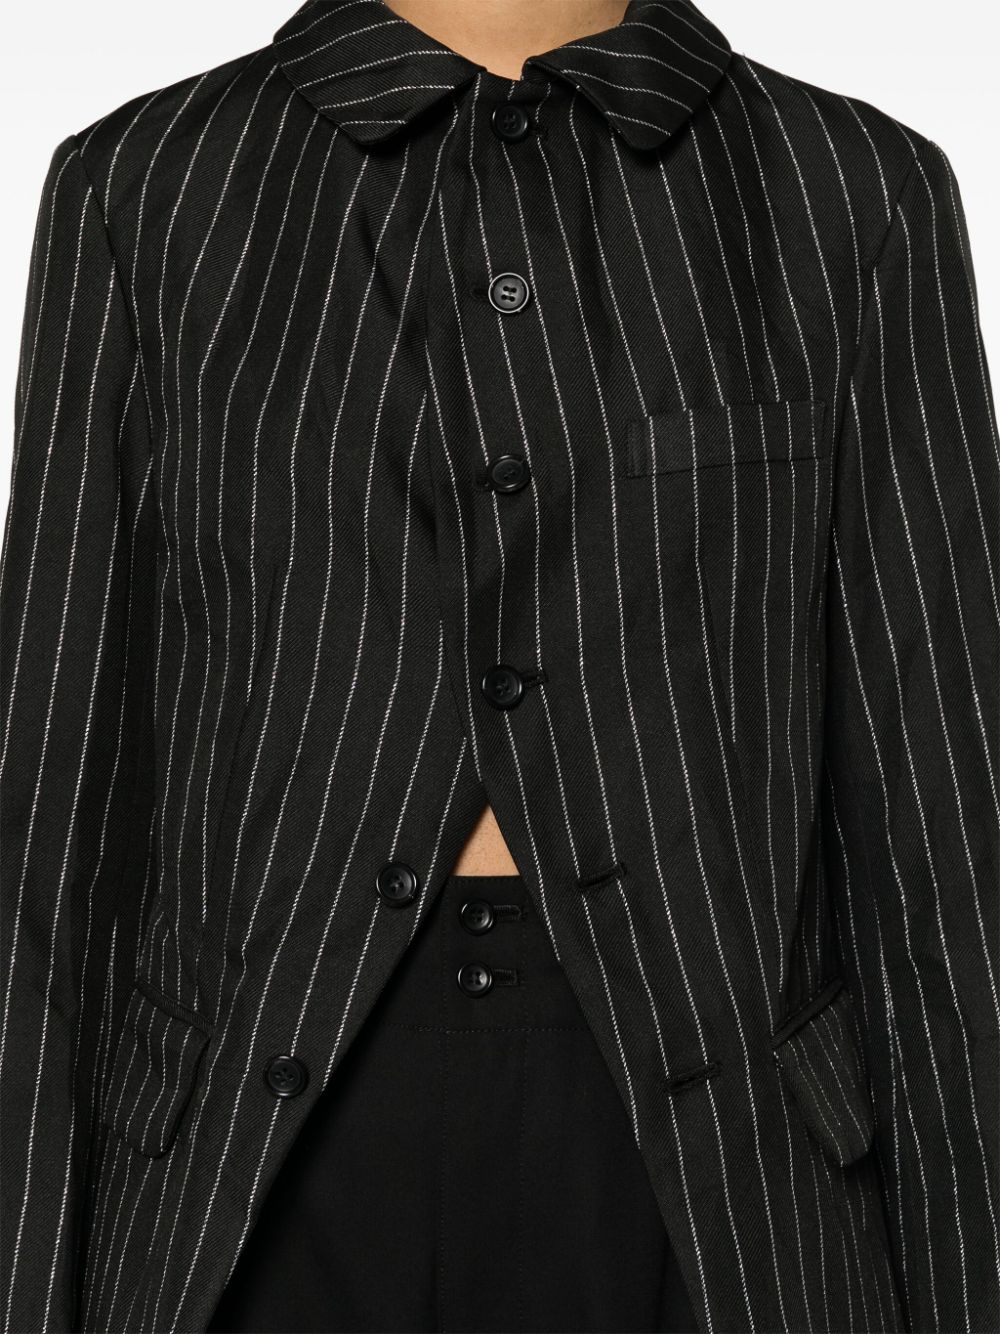 COMME DES GARÇONS Striped Jacket with Metallic Detailing - Women's Outerwear